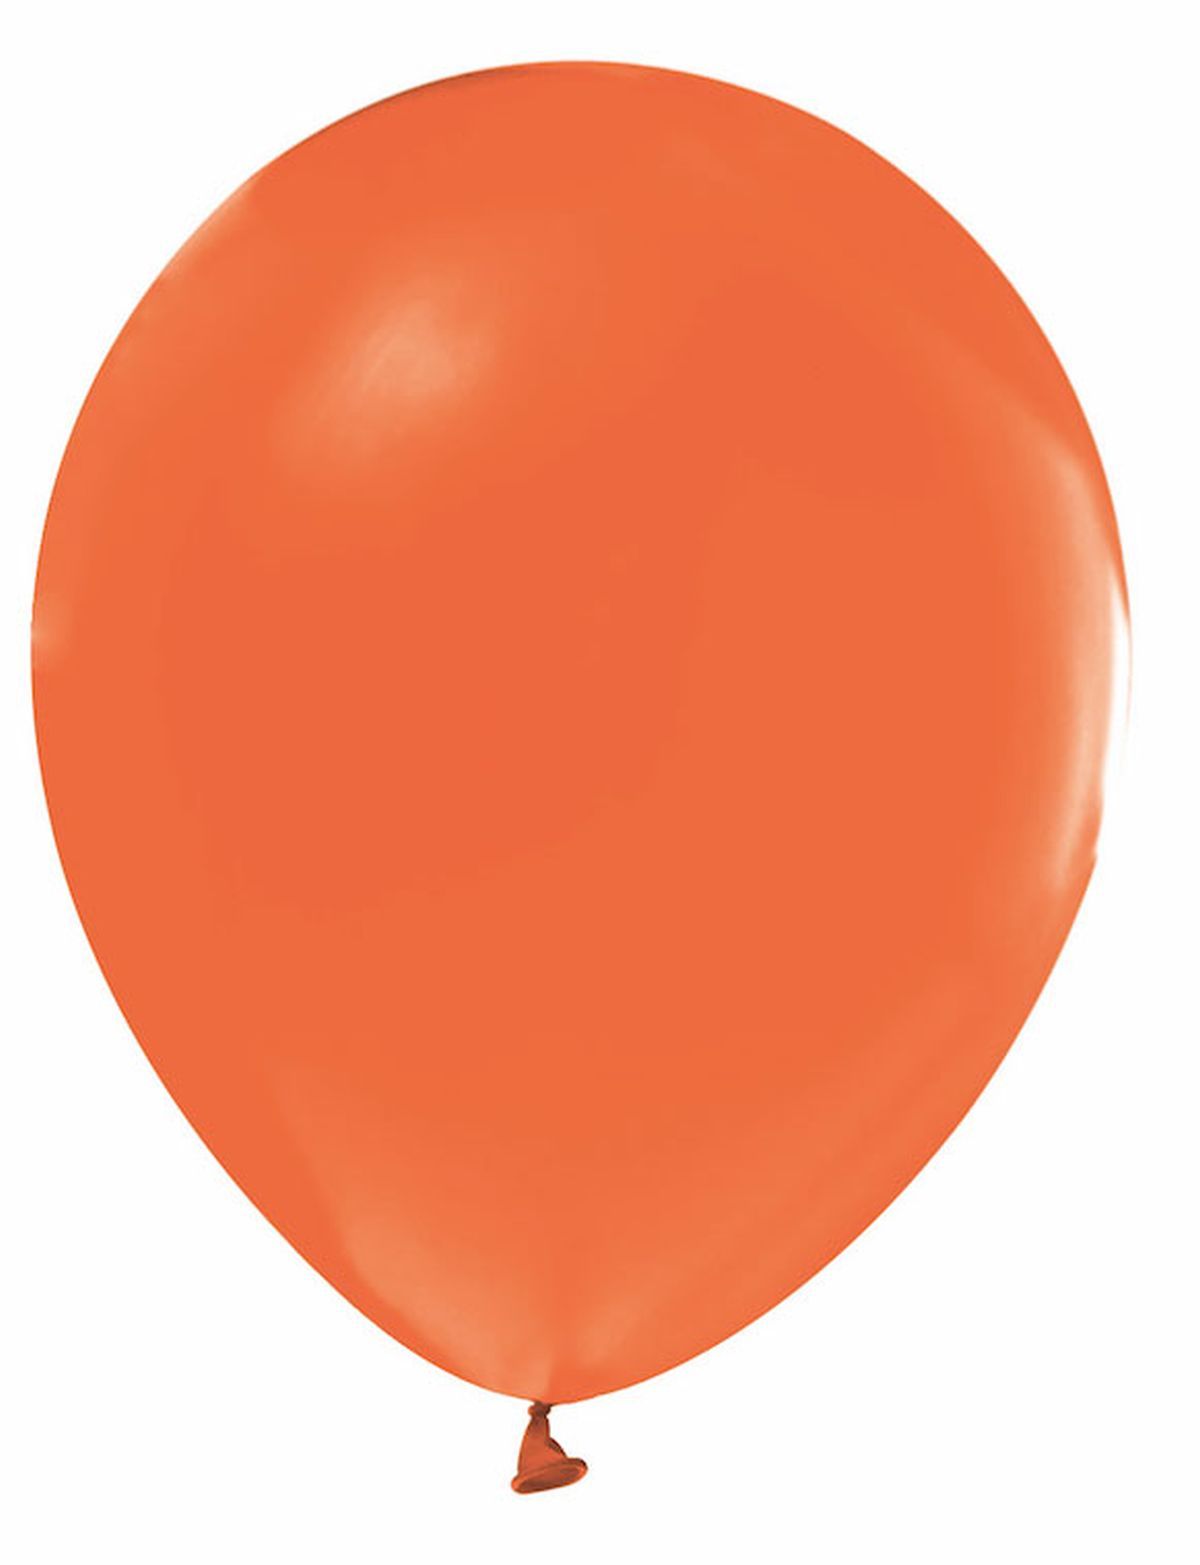 На оранжевом шаре. Воздушный шарик. Оранжевый шарик. Оранжевые воздушные шары. Воздушный шарик круглый.